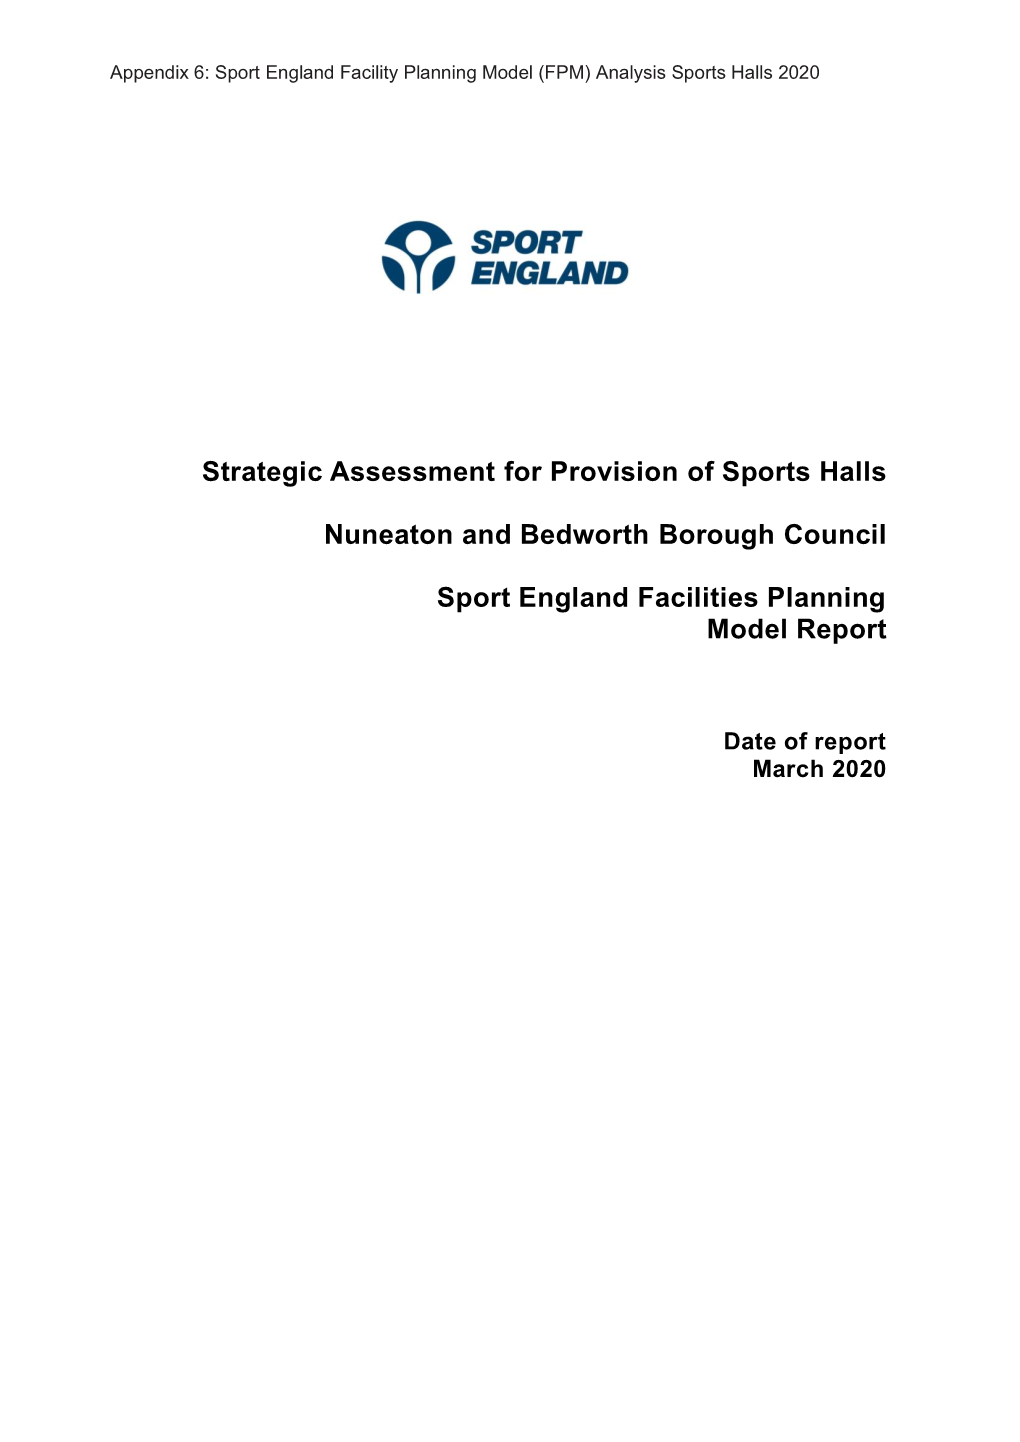 Strategic Assessment for Provision of Sports Halls